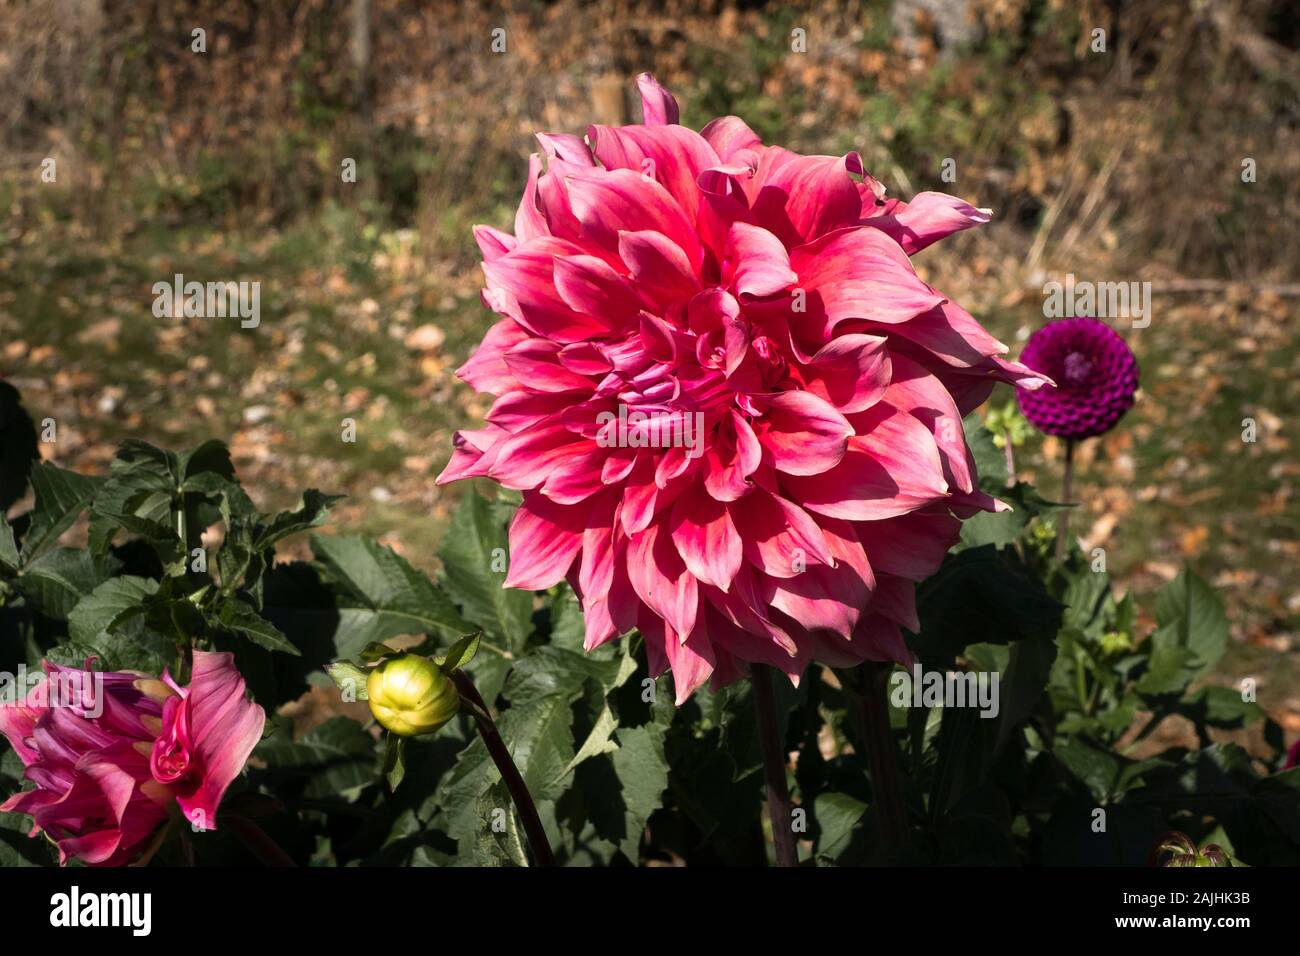 Dalia flor gigante fotografías e imágenes de alta resolución - Alamy